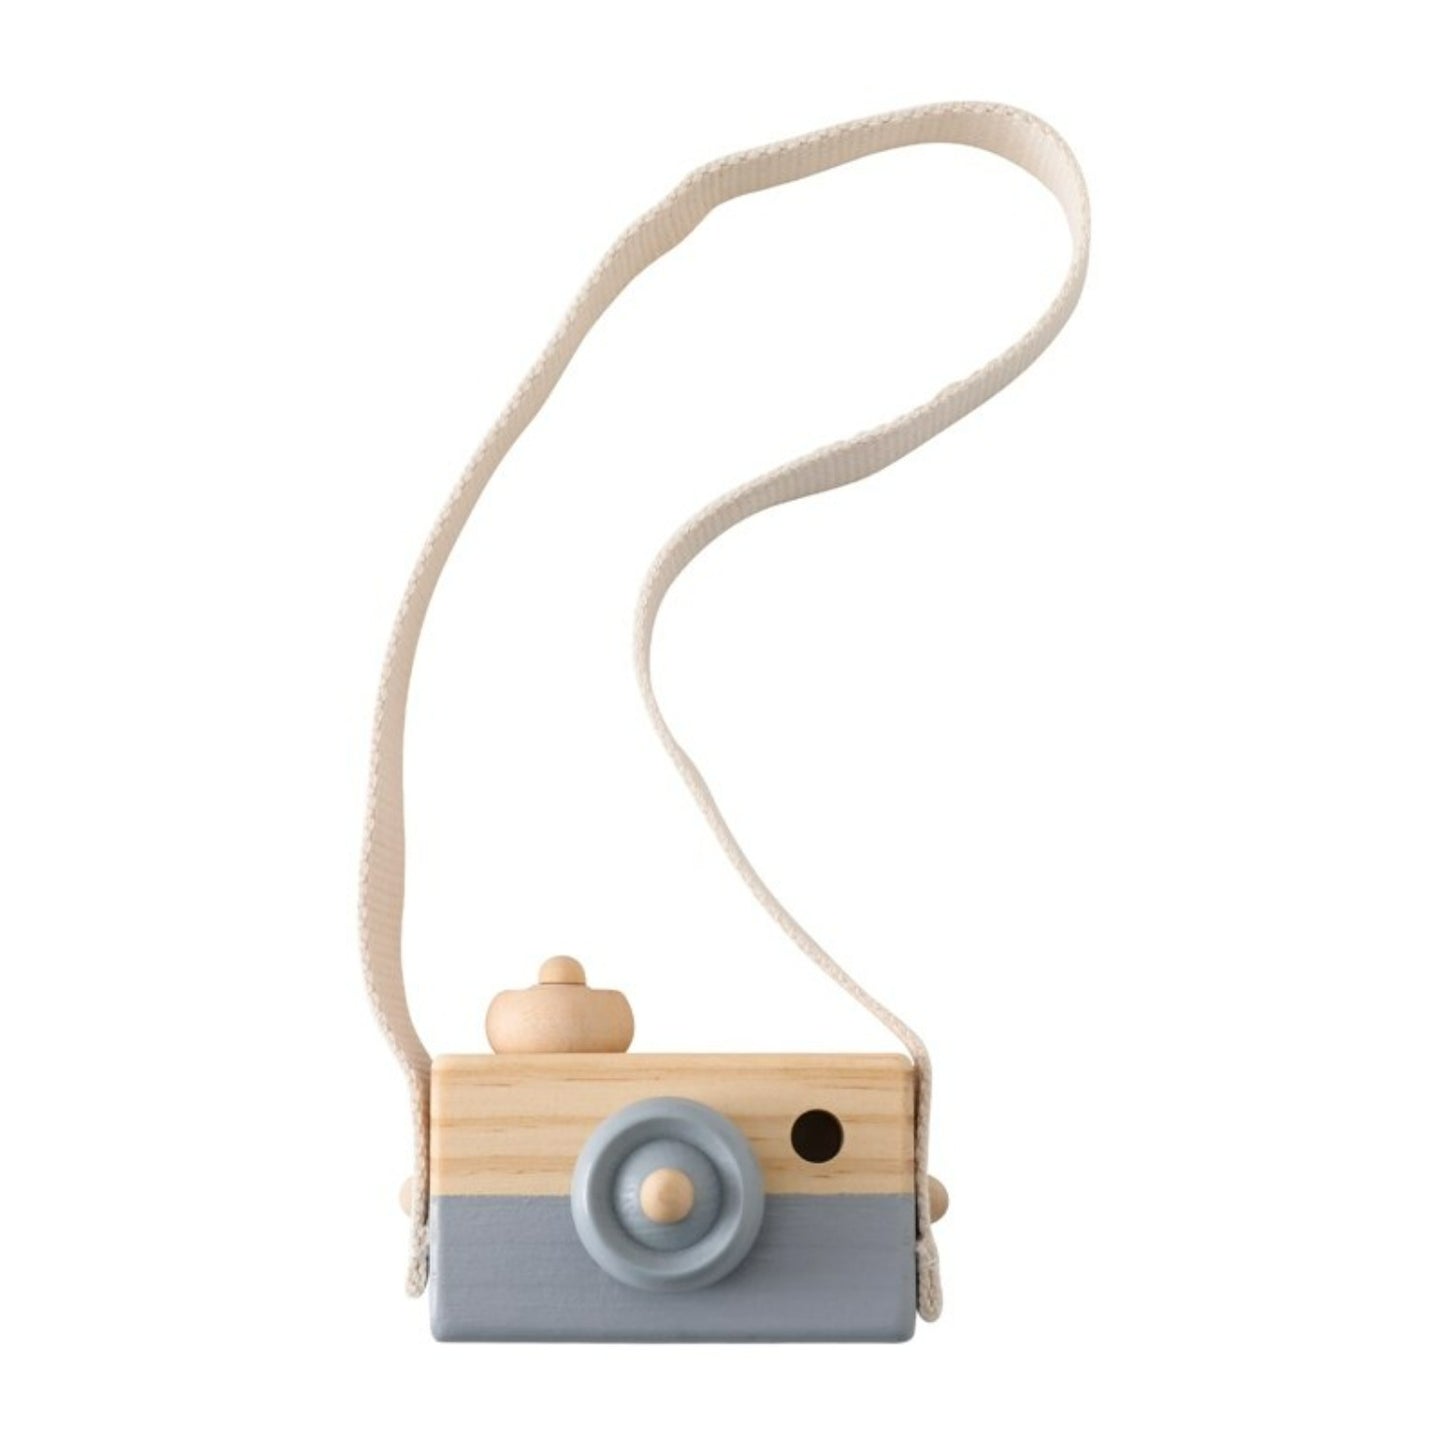 European Style Wooden Toy Camera